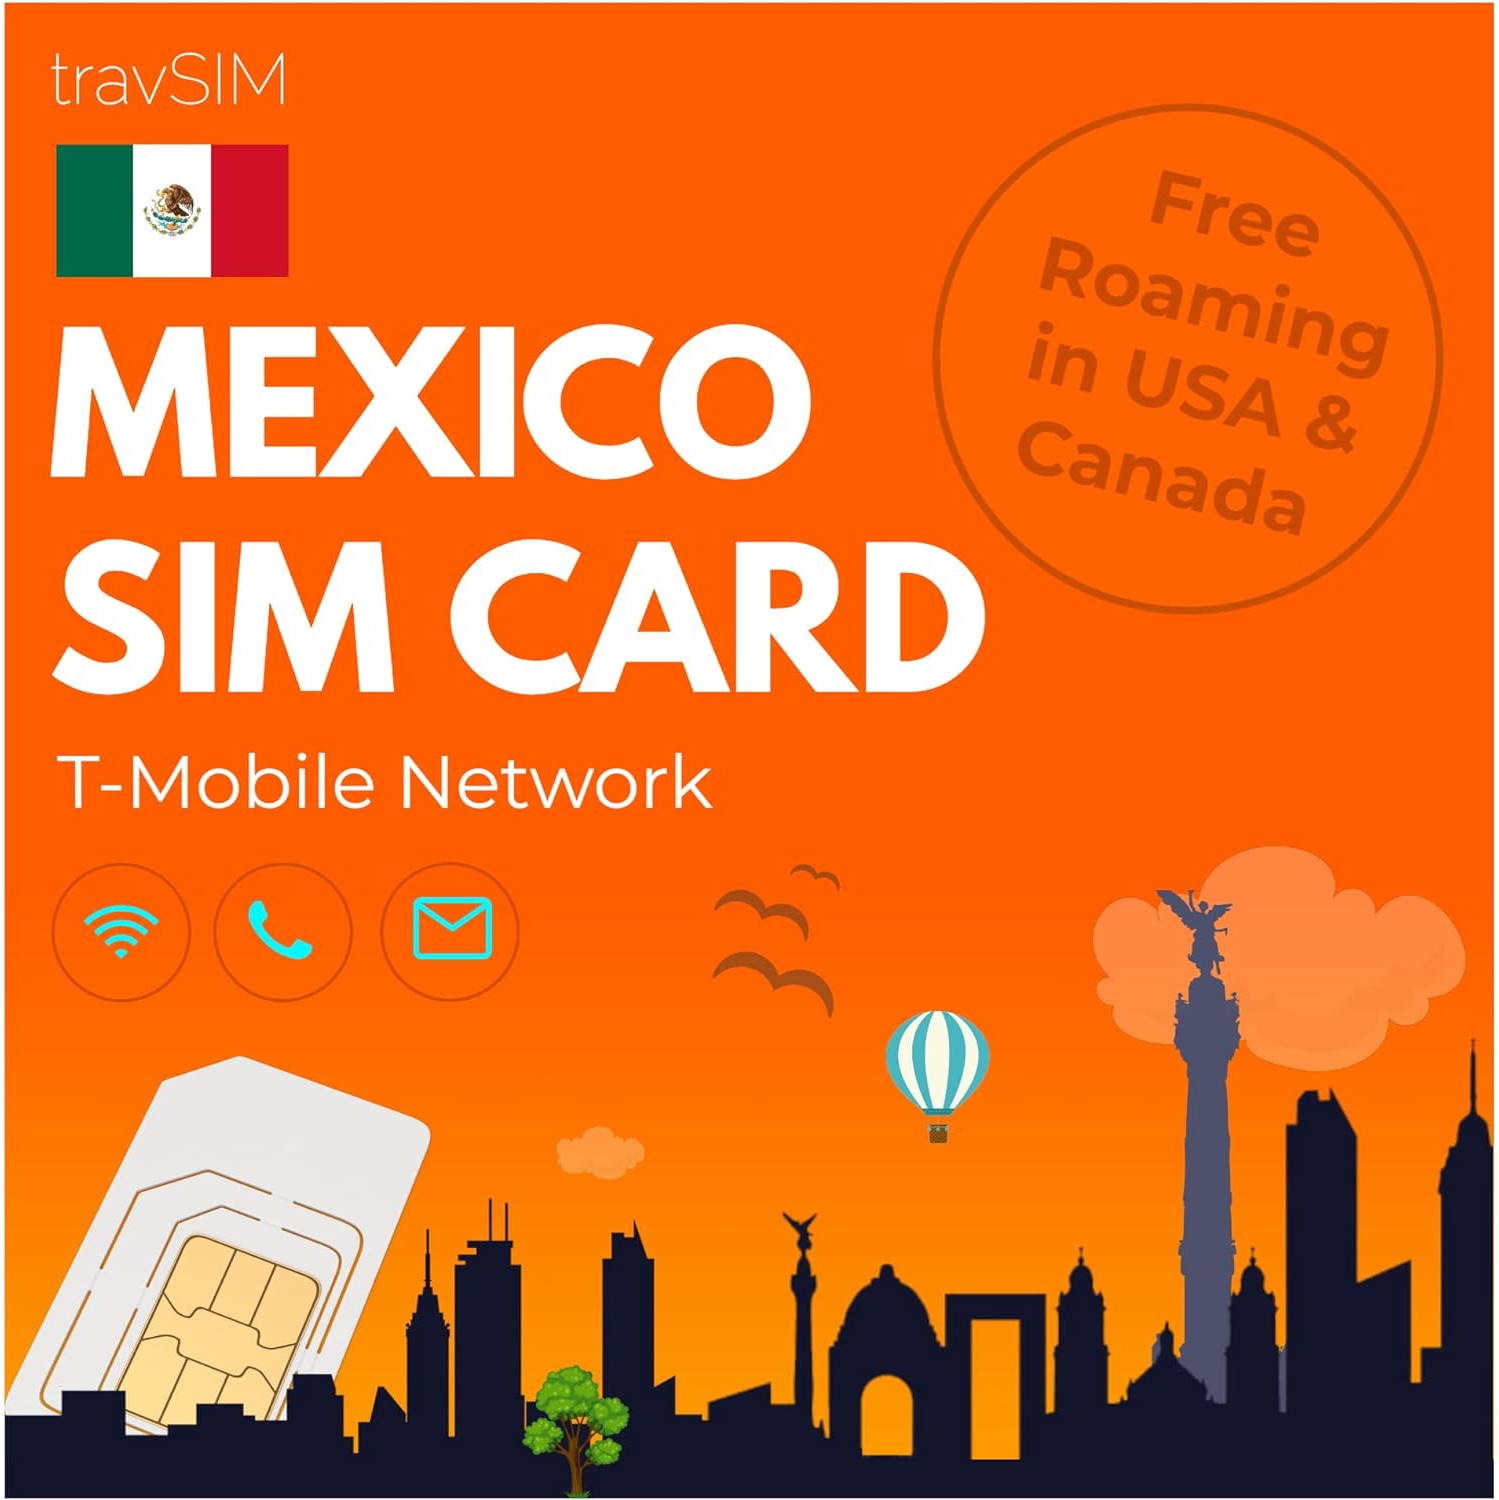 Mexico SIM Card | Uses the T-Mobile Network | 5GB mobile data | Free roaming USA & Canada | Mexico SIM Card